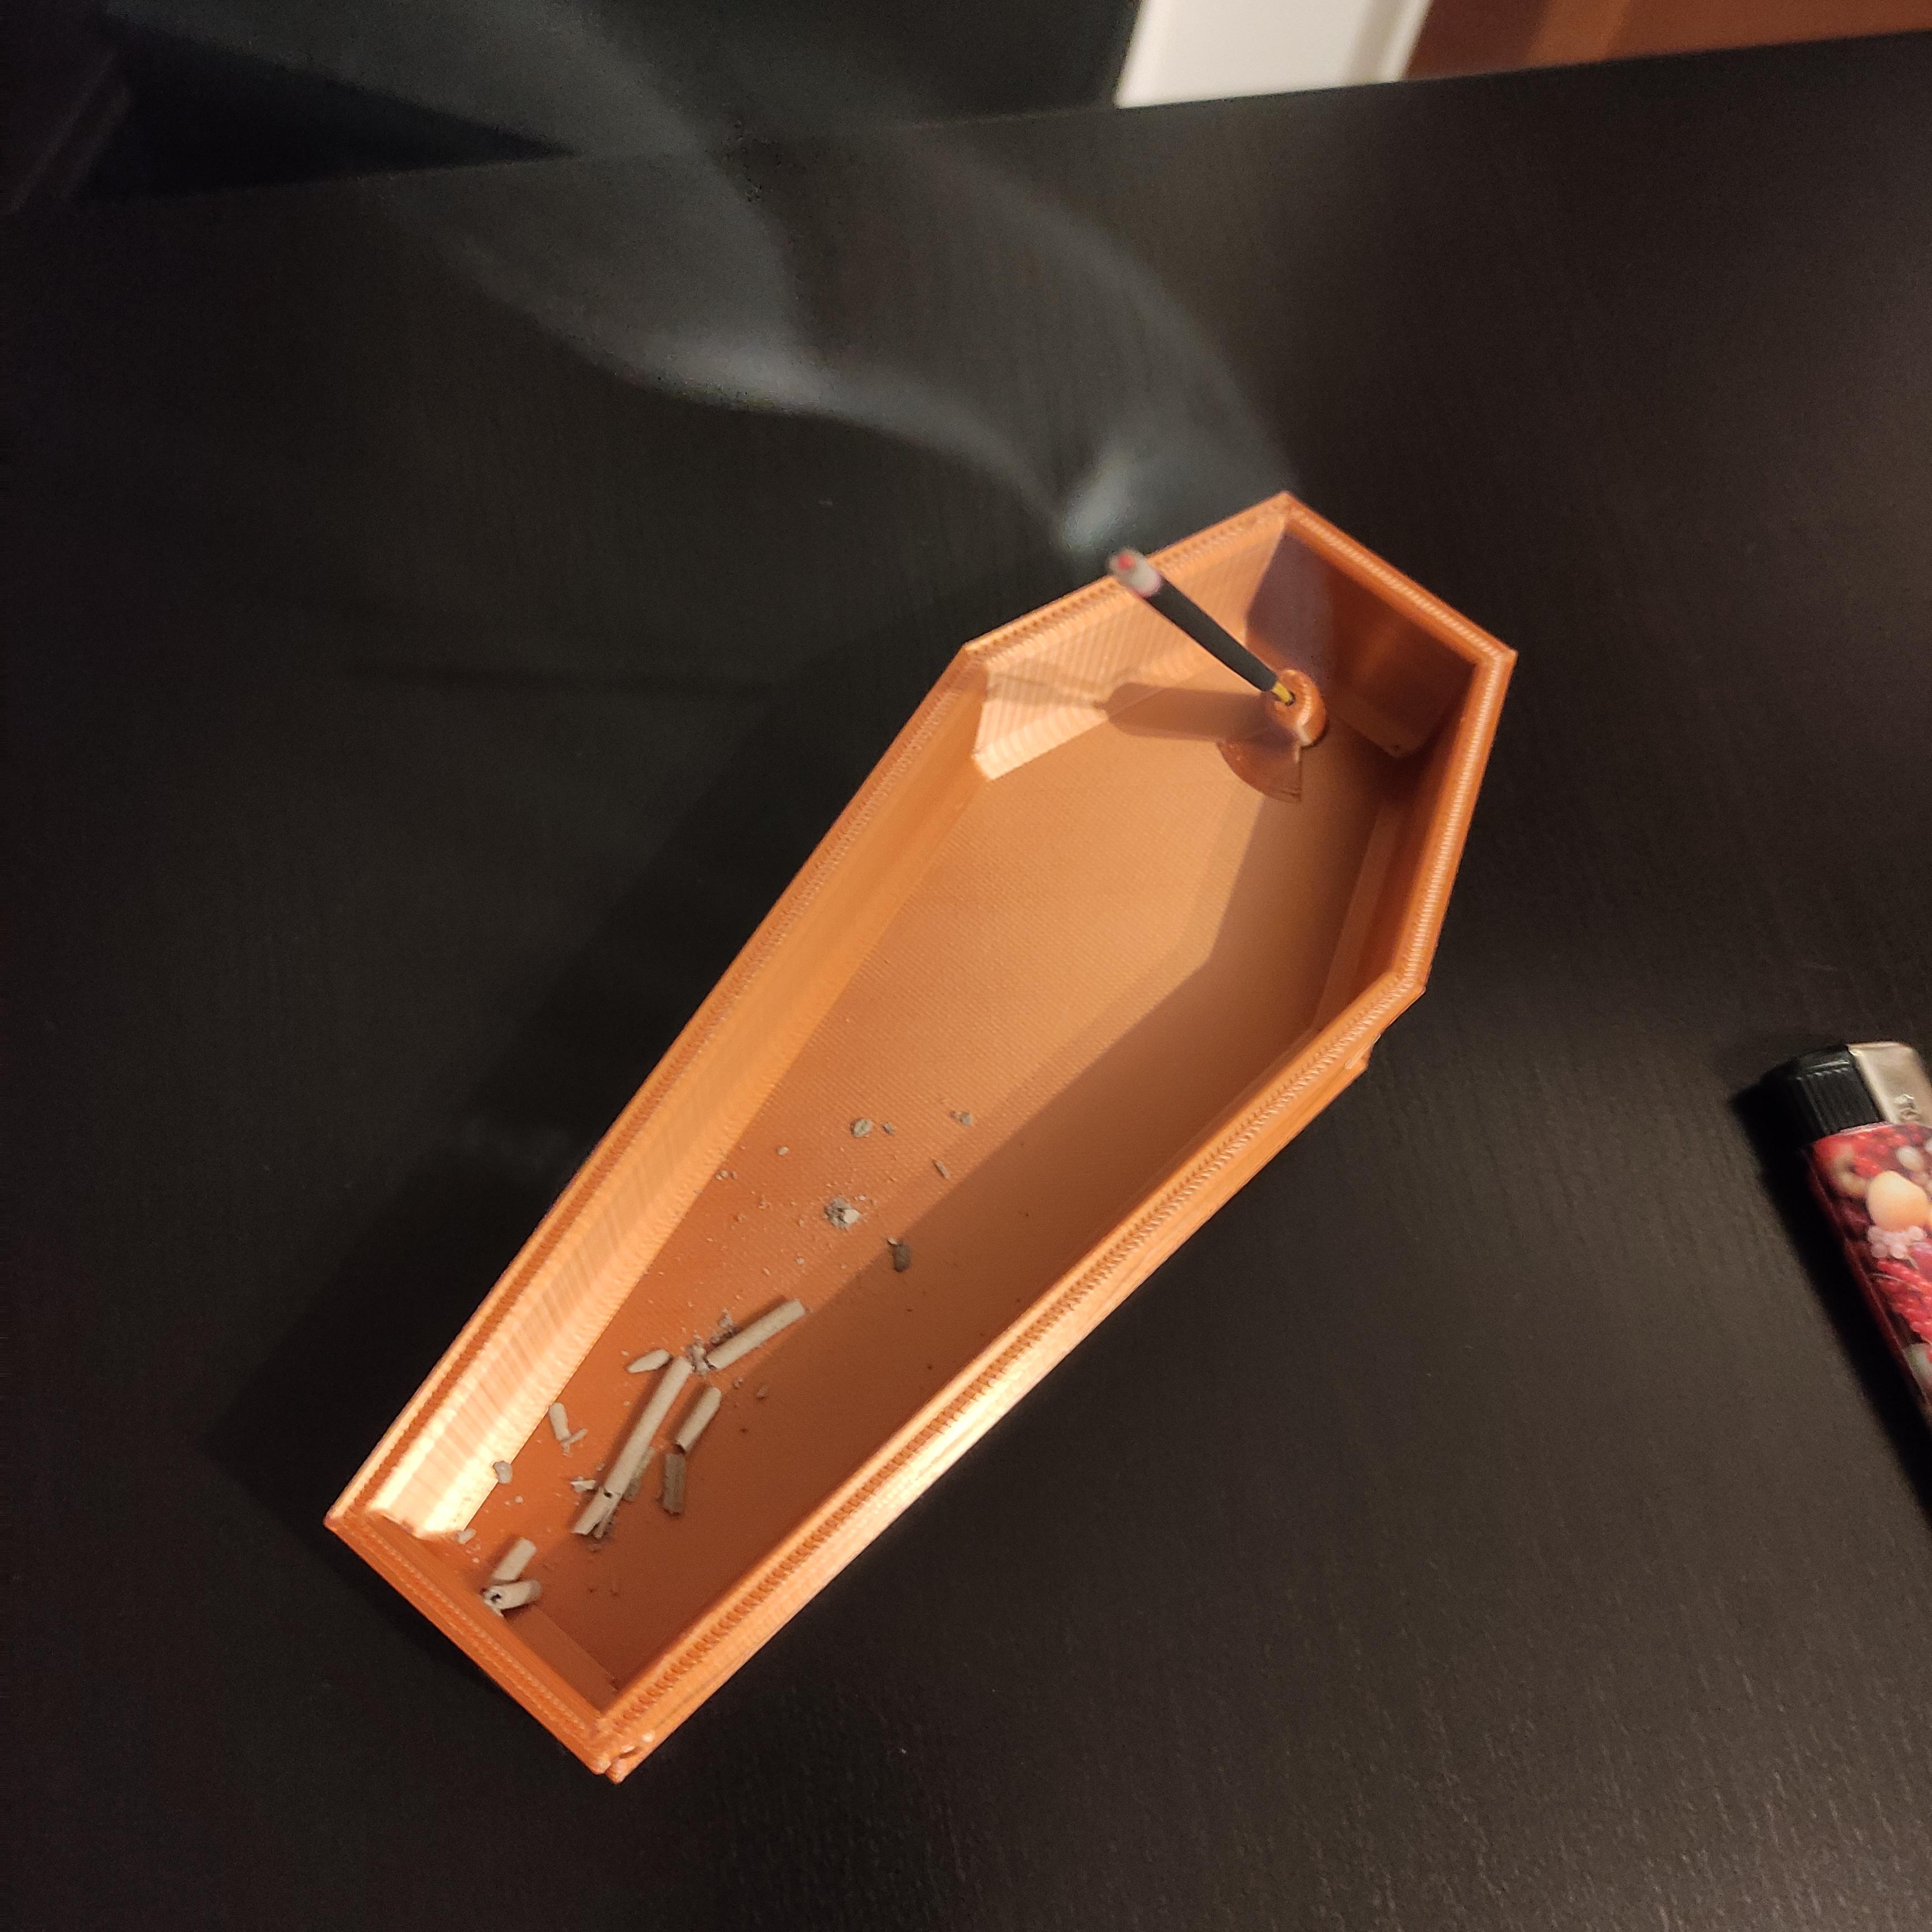 Incense Coffin 3d model